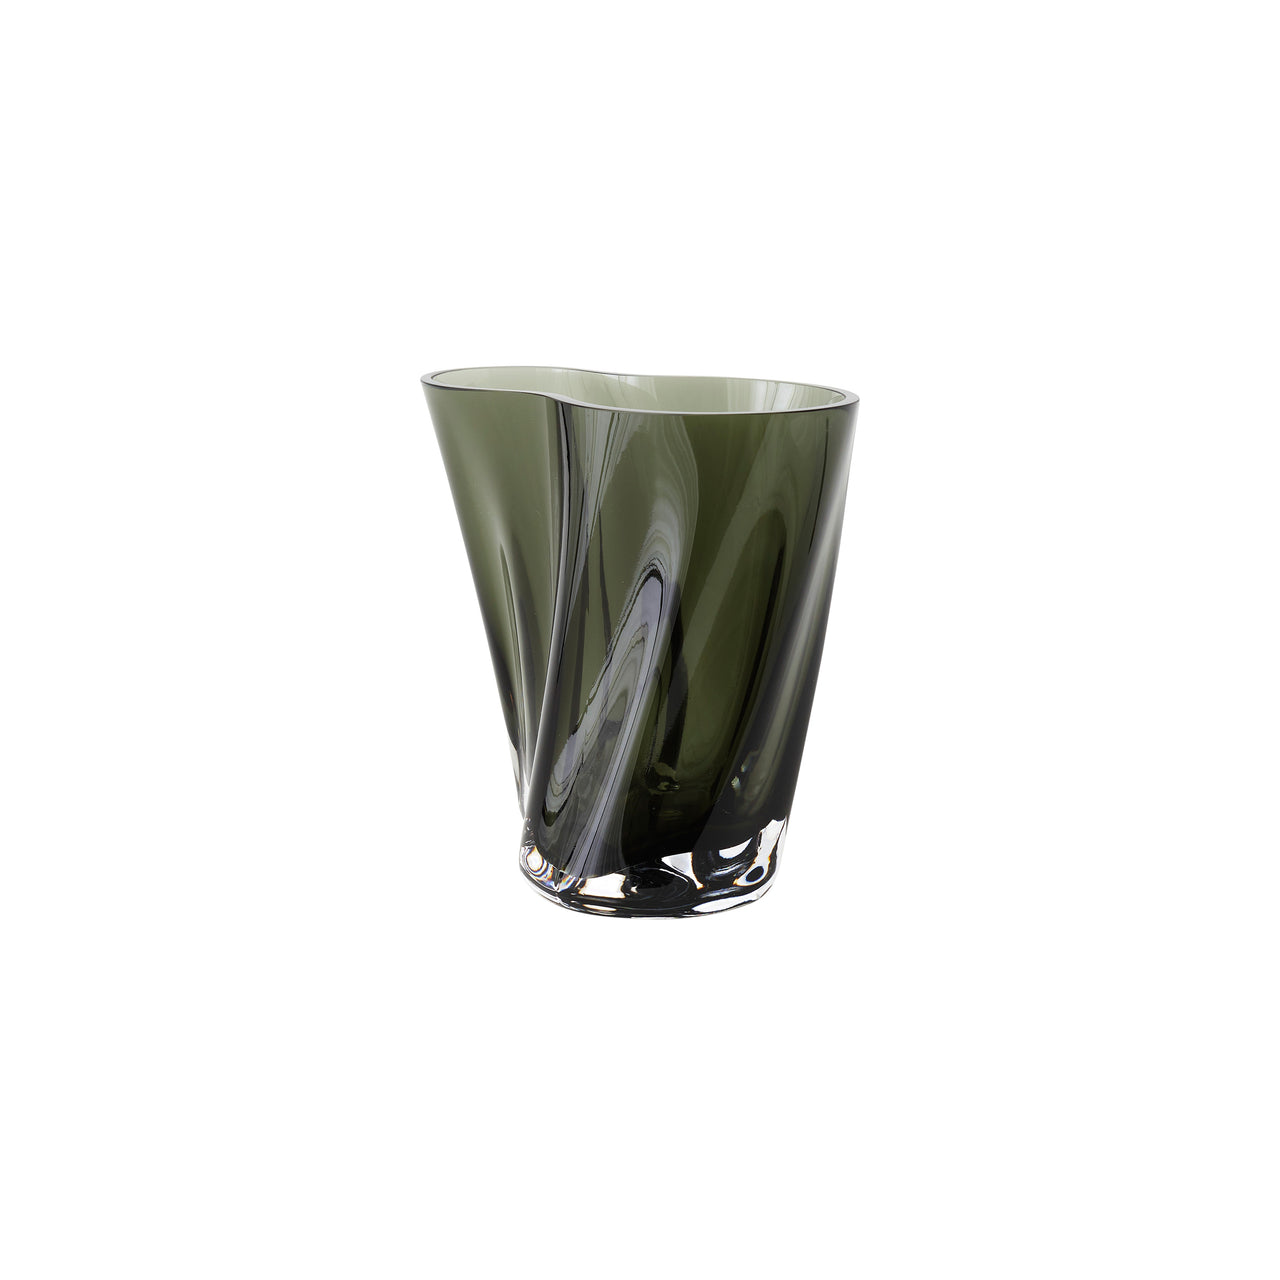 Aer Vase: Small - 7.5